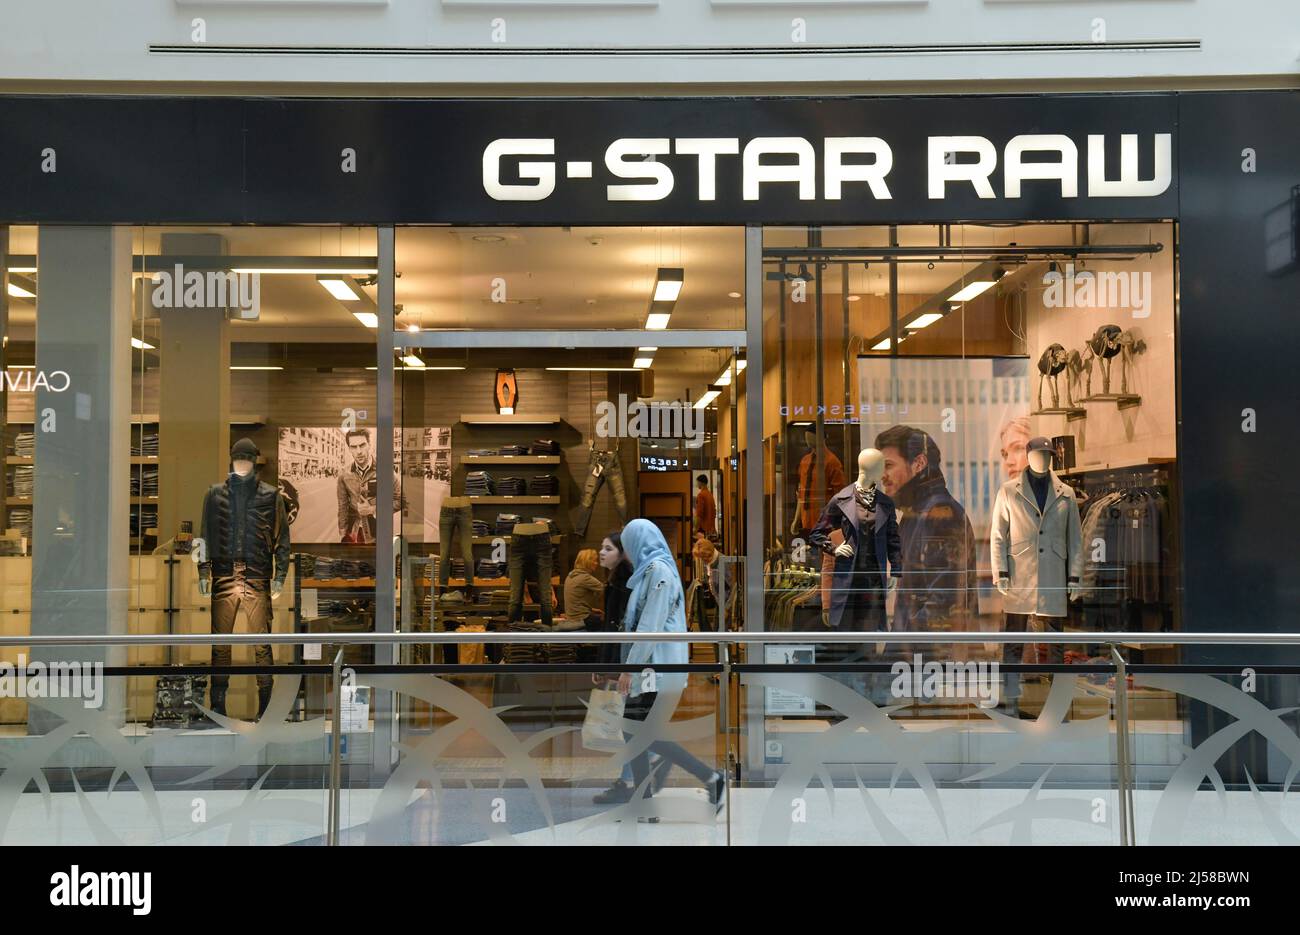 G-Star Raw, Department Store Alexa, Grunerstrasse, Mitte, Berlin, Germany  Stock Photo - Alamy